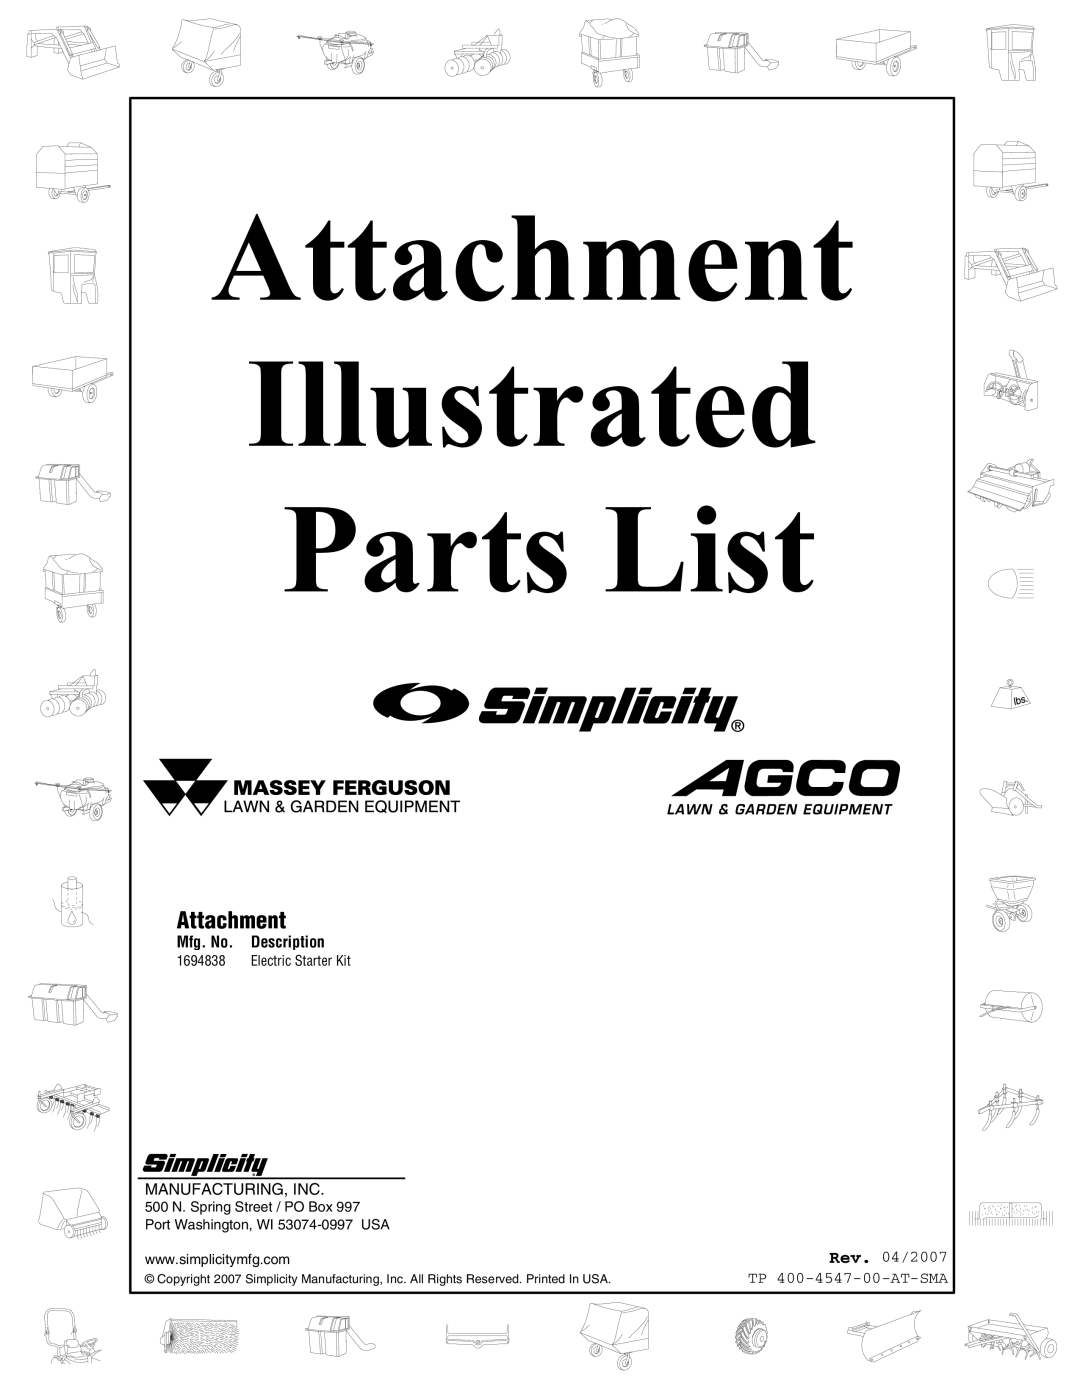 Snapper manual Attachment, Mfg. No, Description, Rev. 04/2007, TP 400-4547-00-AT-SMA, Illustrated, Parts List 